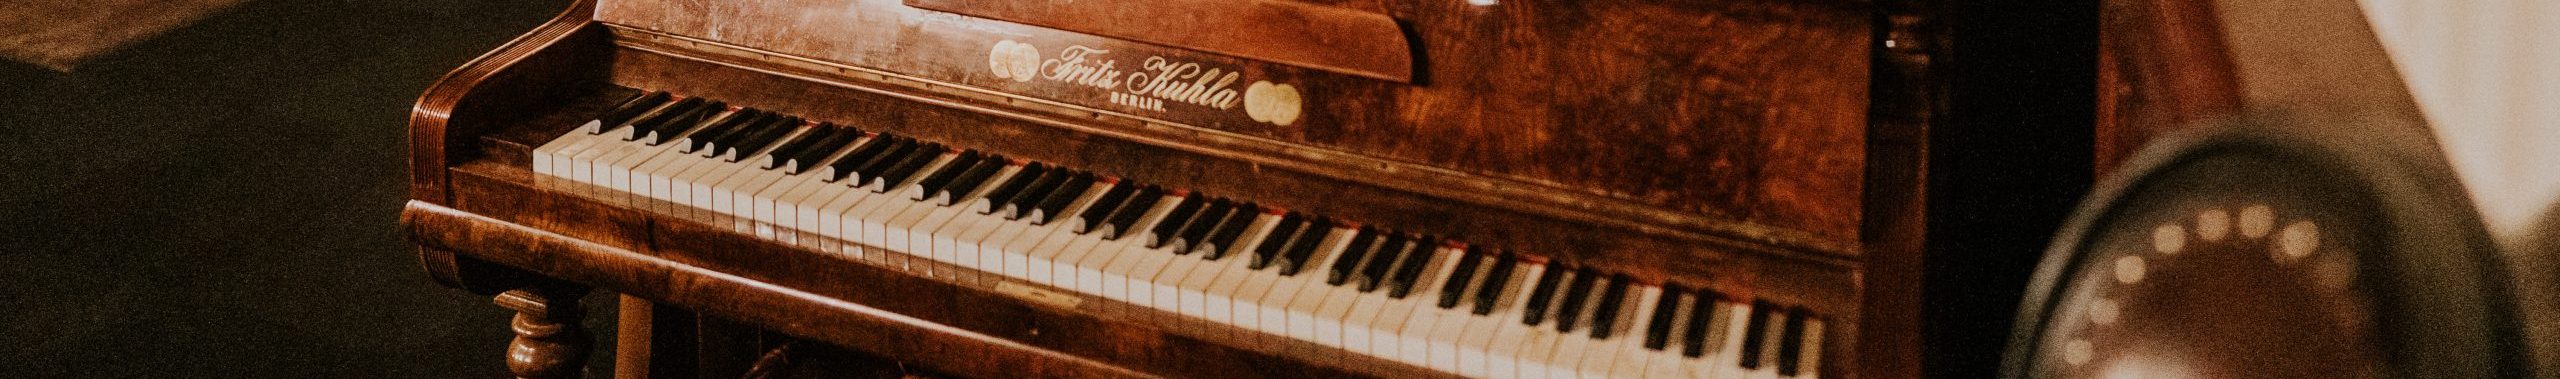 The Keys to L’Chaim – Piano Open Mic Night